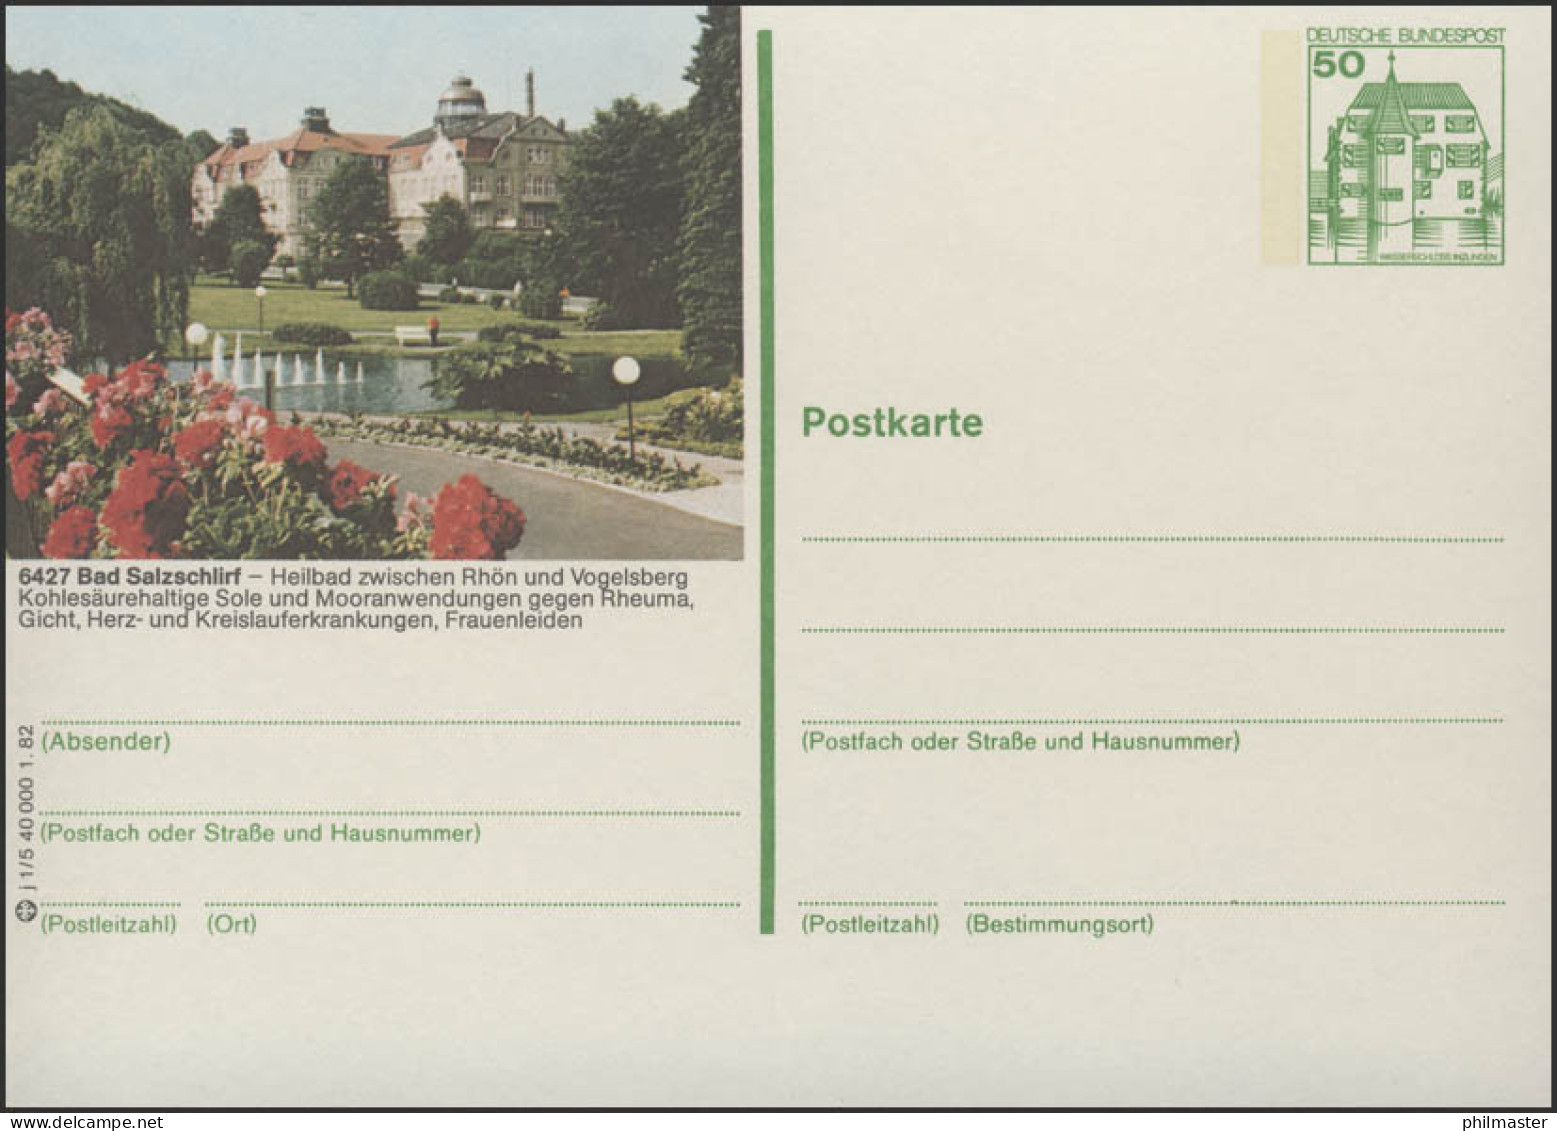 P134-j1/005 - 6427 Bad Salzschlirf, Hotel Badehof ** - Illustrated Postcards - Mint